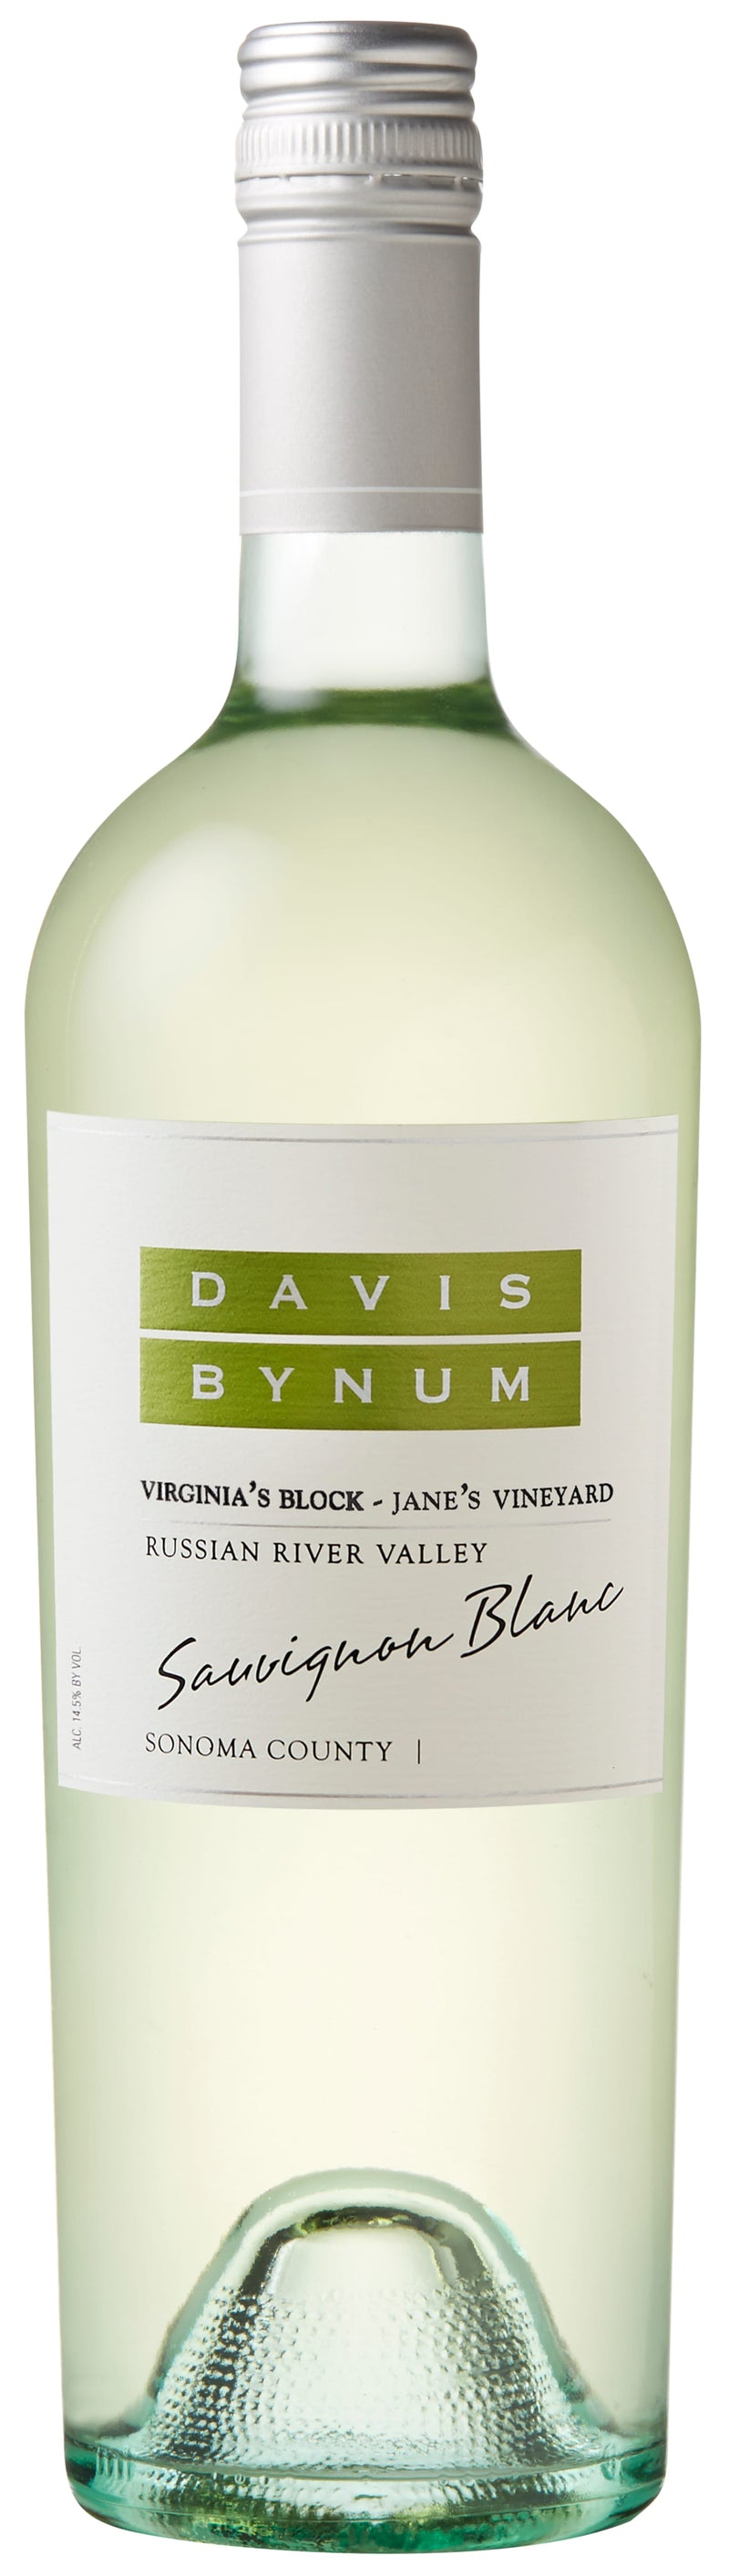 Davis Bynum Virginia's Block Sauvignon Blanc, Russian River Valley